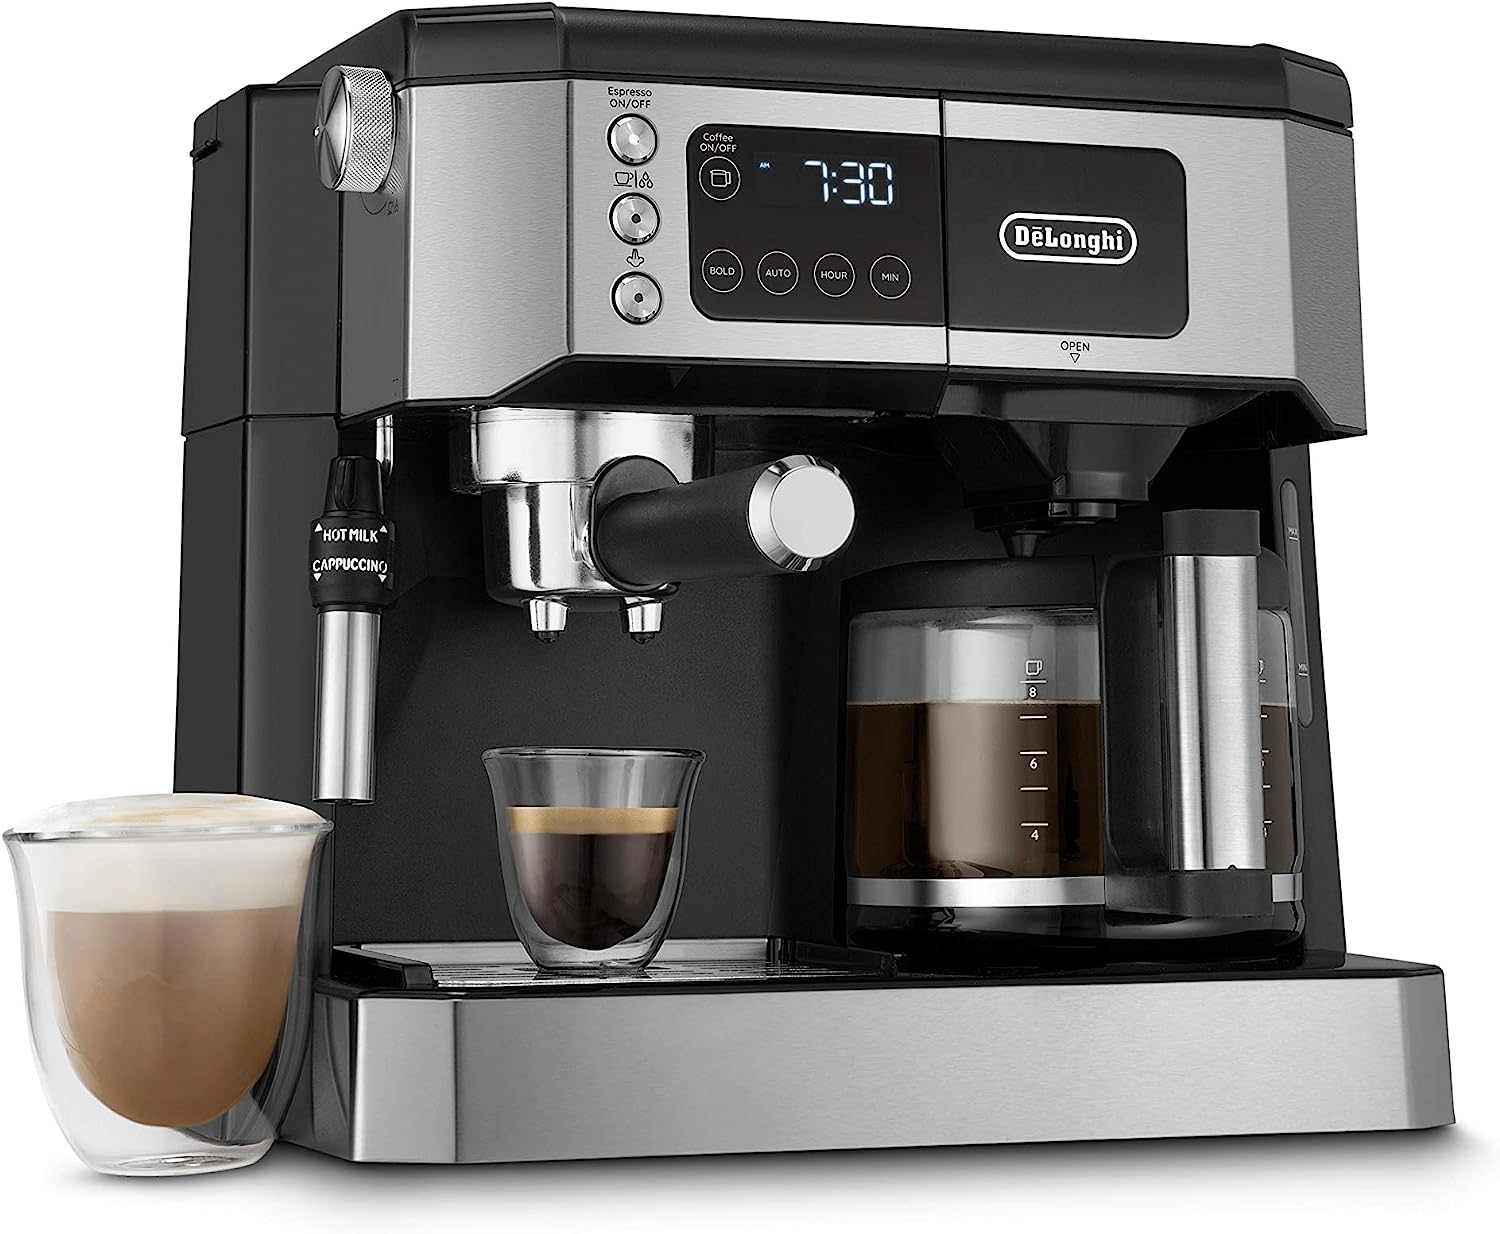 Smart Coffee Makers DeLonghi All in One Combination Coffee Maker Espresso Machine ECoffeeFinder.com 1